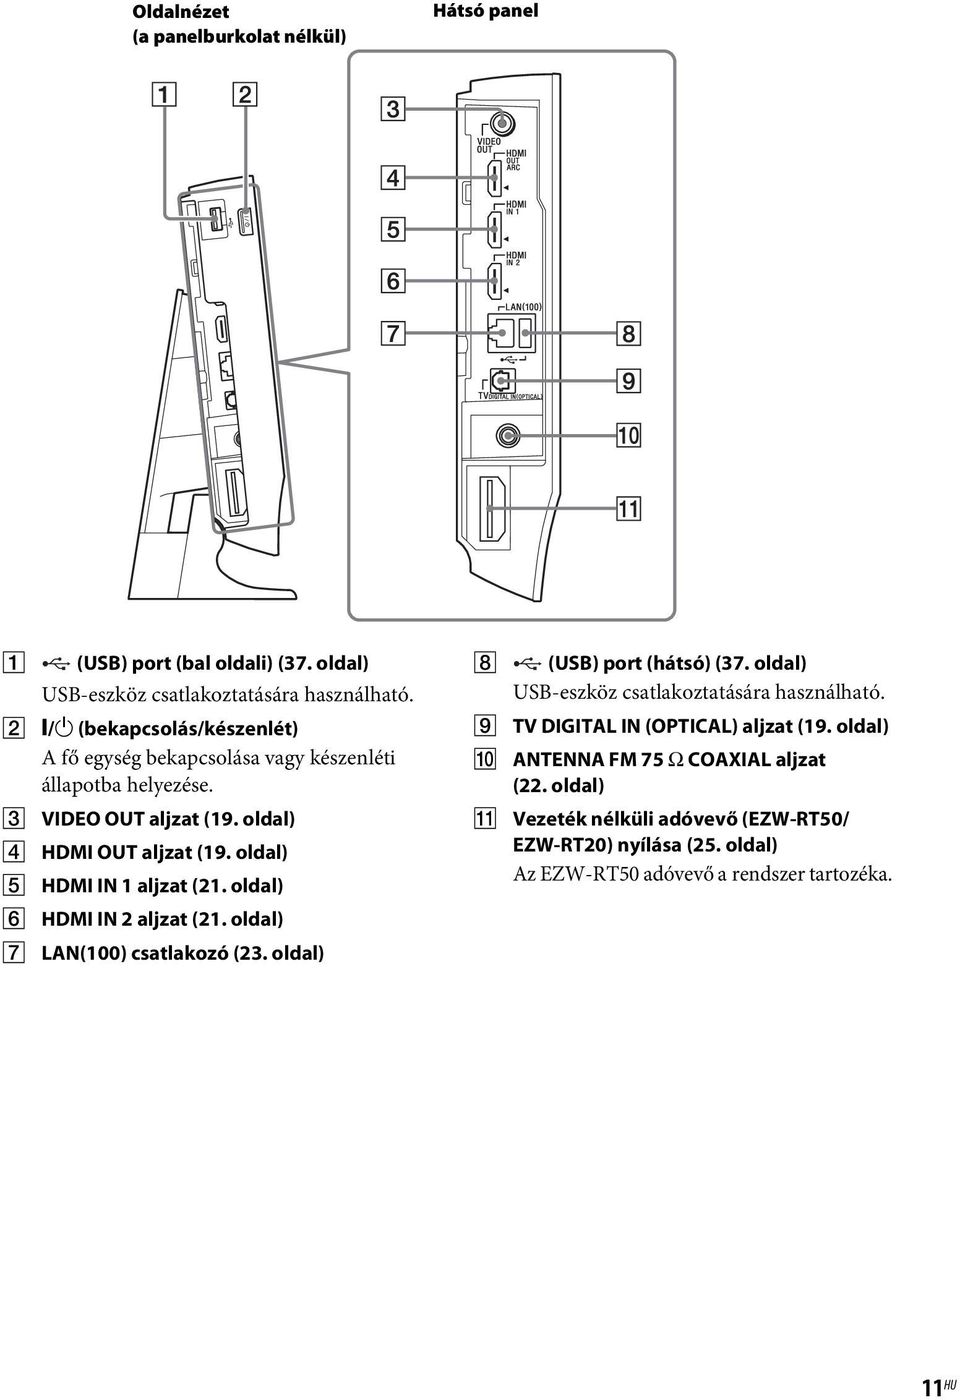 oldal) E HDMI IN 1 aljzat (21. oldal) F HDMI IN 2 aljzat (21. oldal) G LAN(100) csatlakozó (23. oldal) H (USB) port (hátsó) (37.